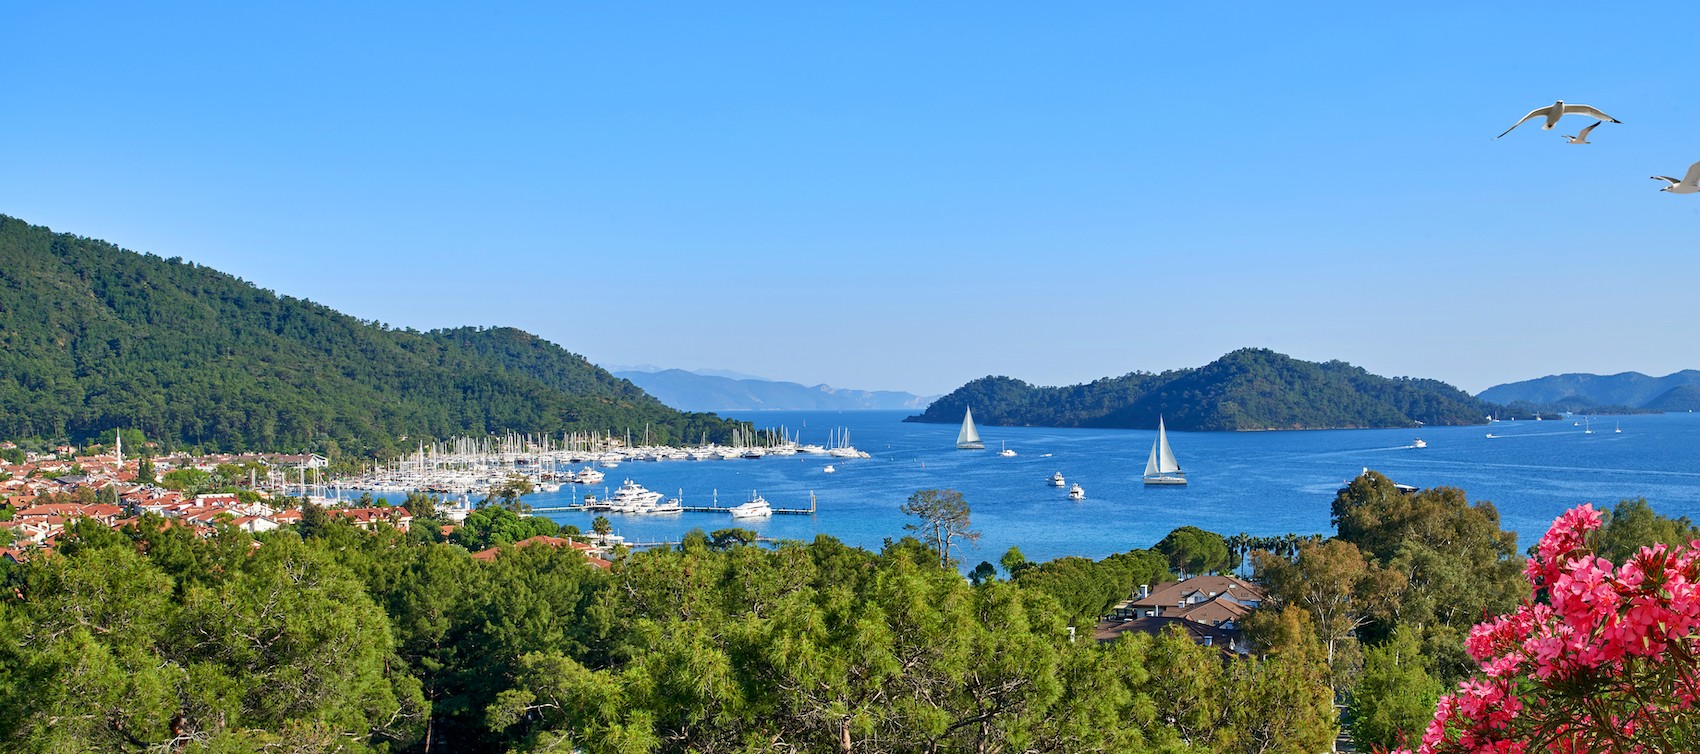 Panoramic view from Gocek Marina with sailboats. Fethiye, Turkey